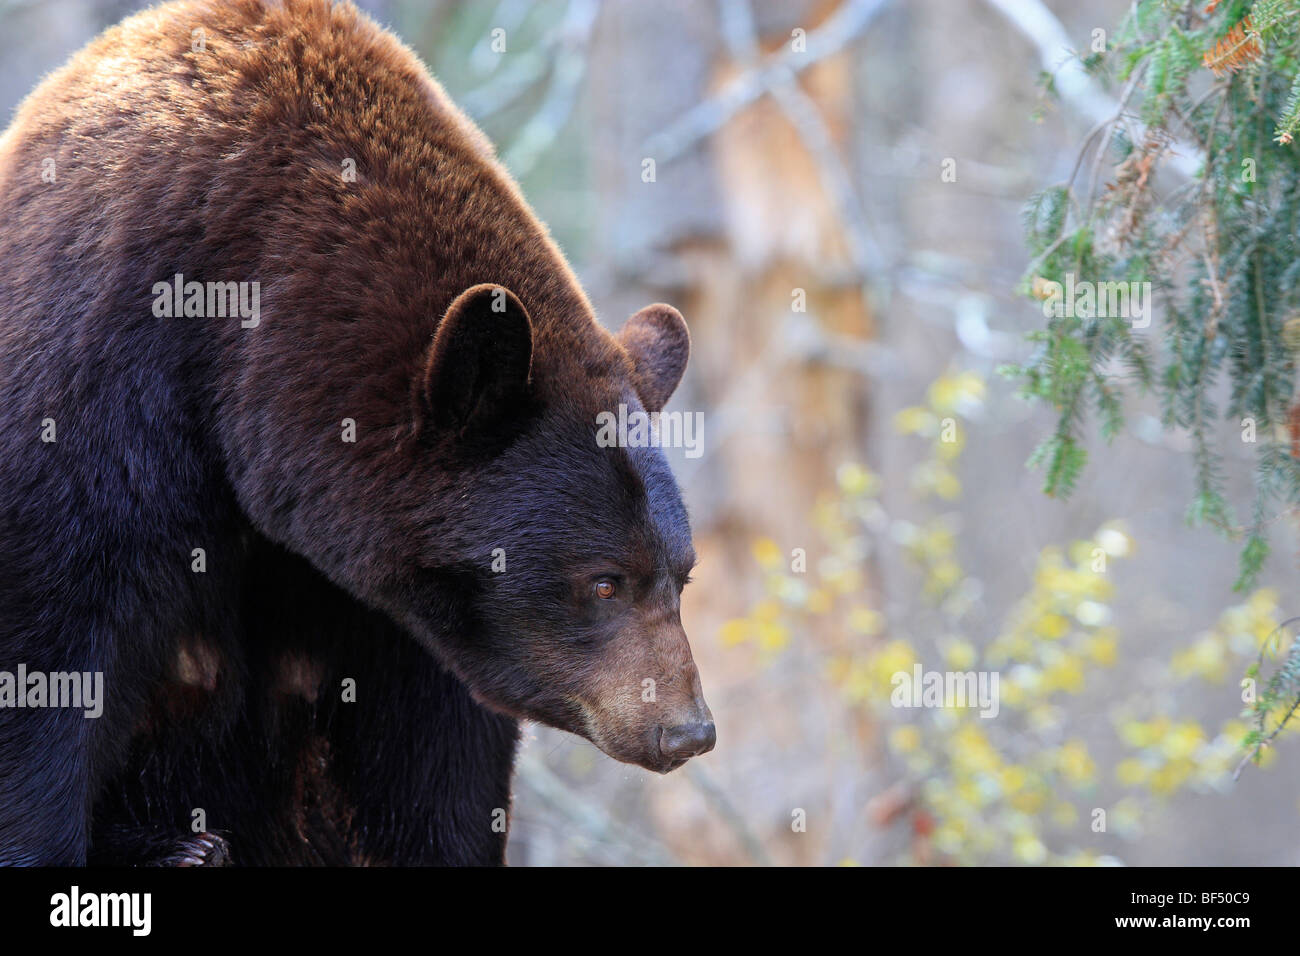 American Black Bear (Ursus americanus). Adult cinnamon bear in forest. Stock Photo